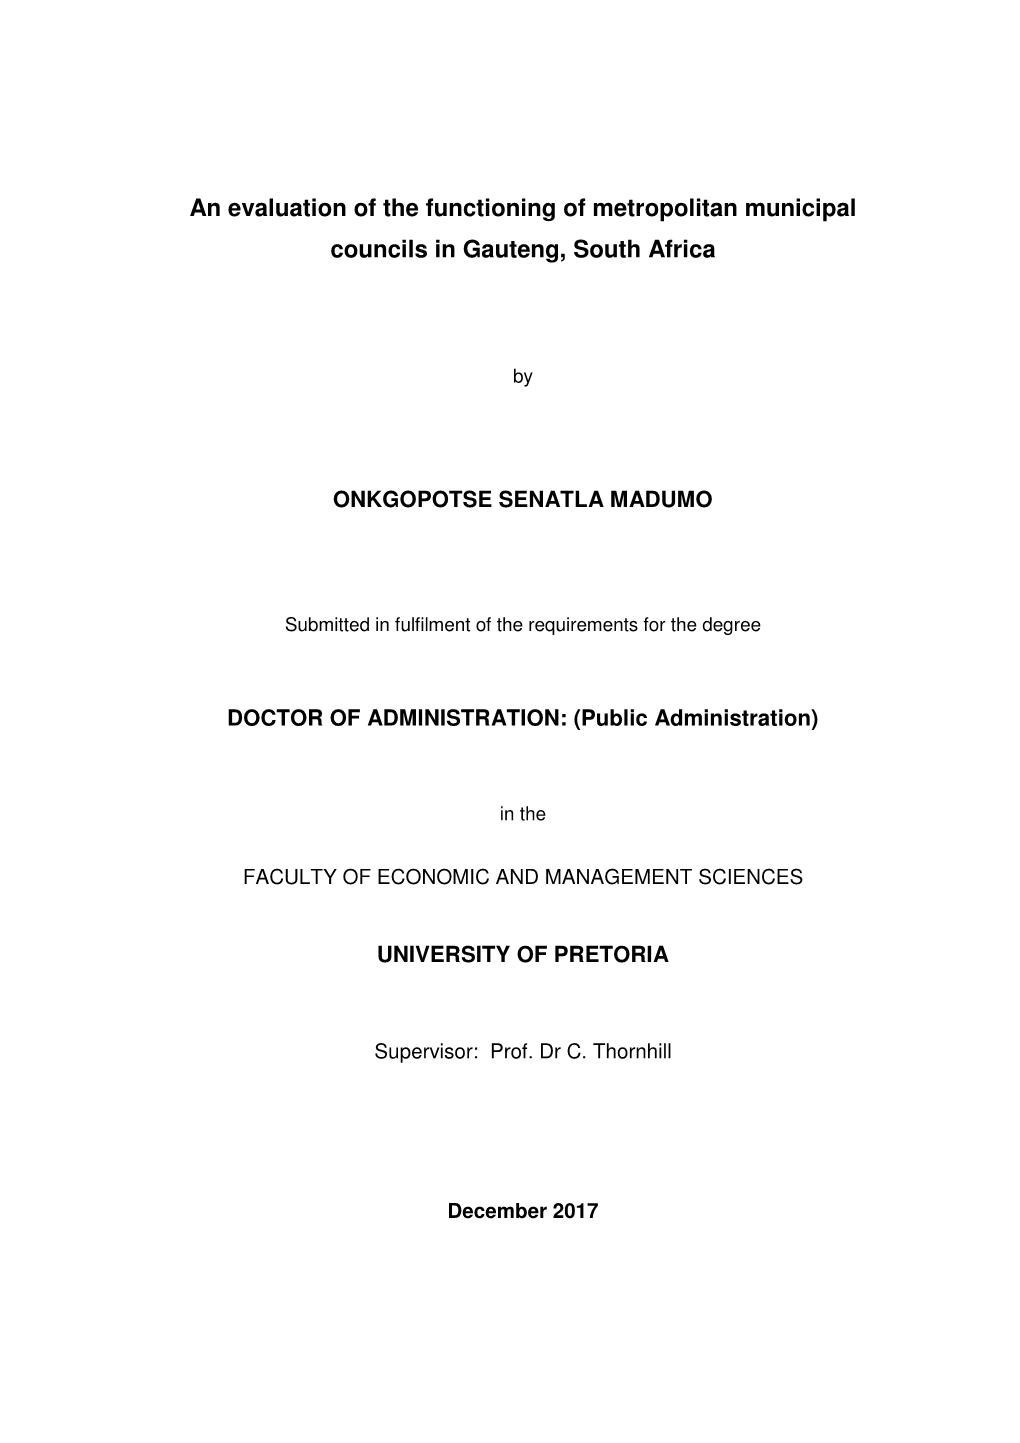 An Evaluation of the Functioning of Metropolitan Municipal Councils in Gauteng, South Africa